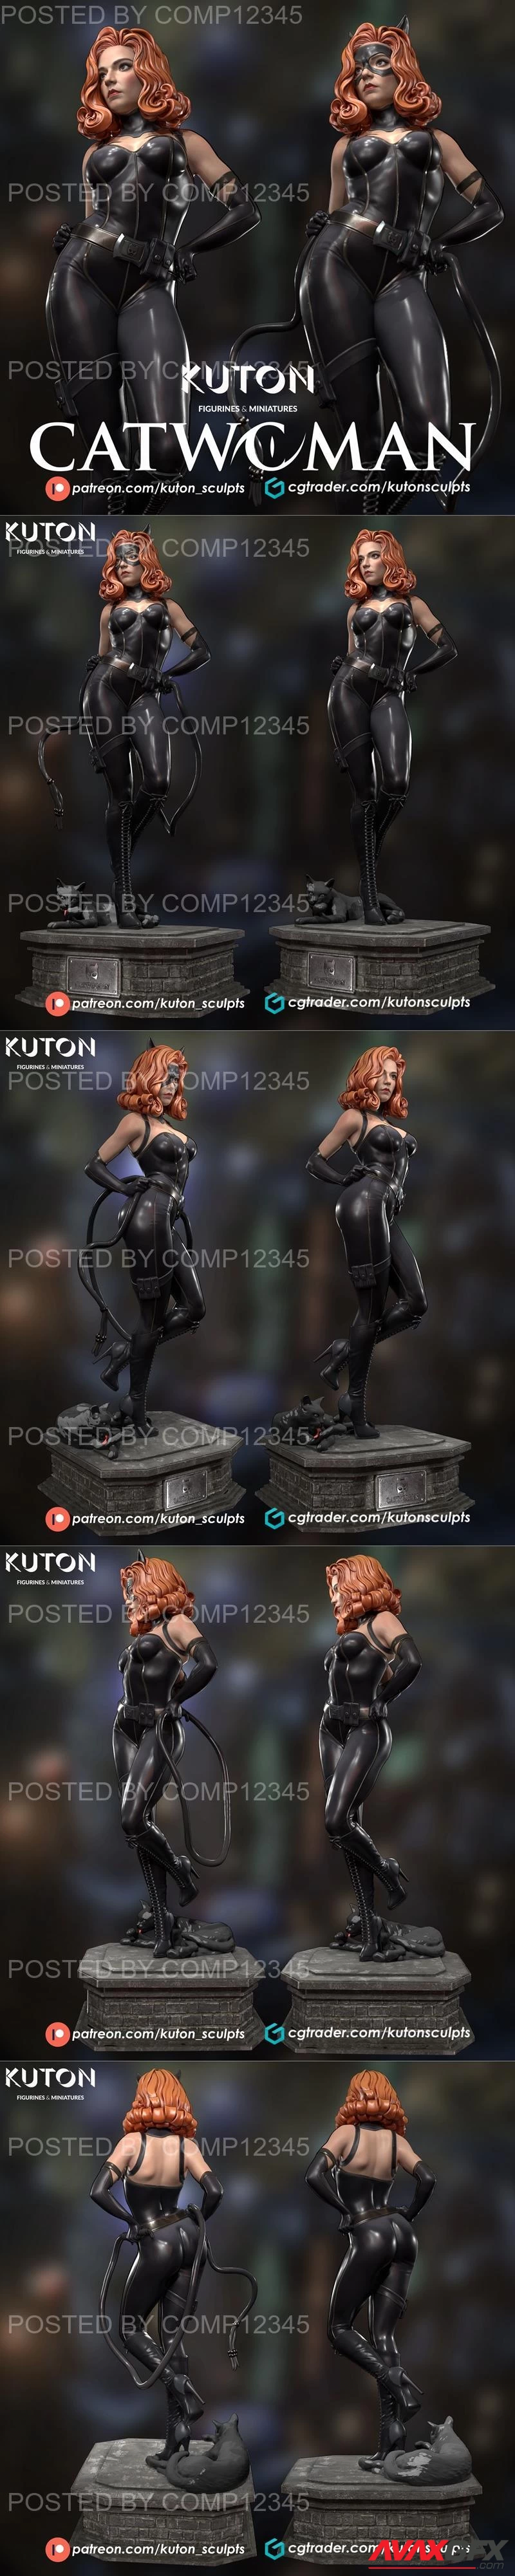 Kuton Figurines - Catwoman